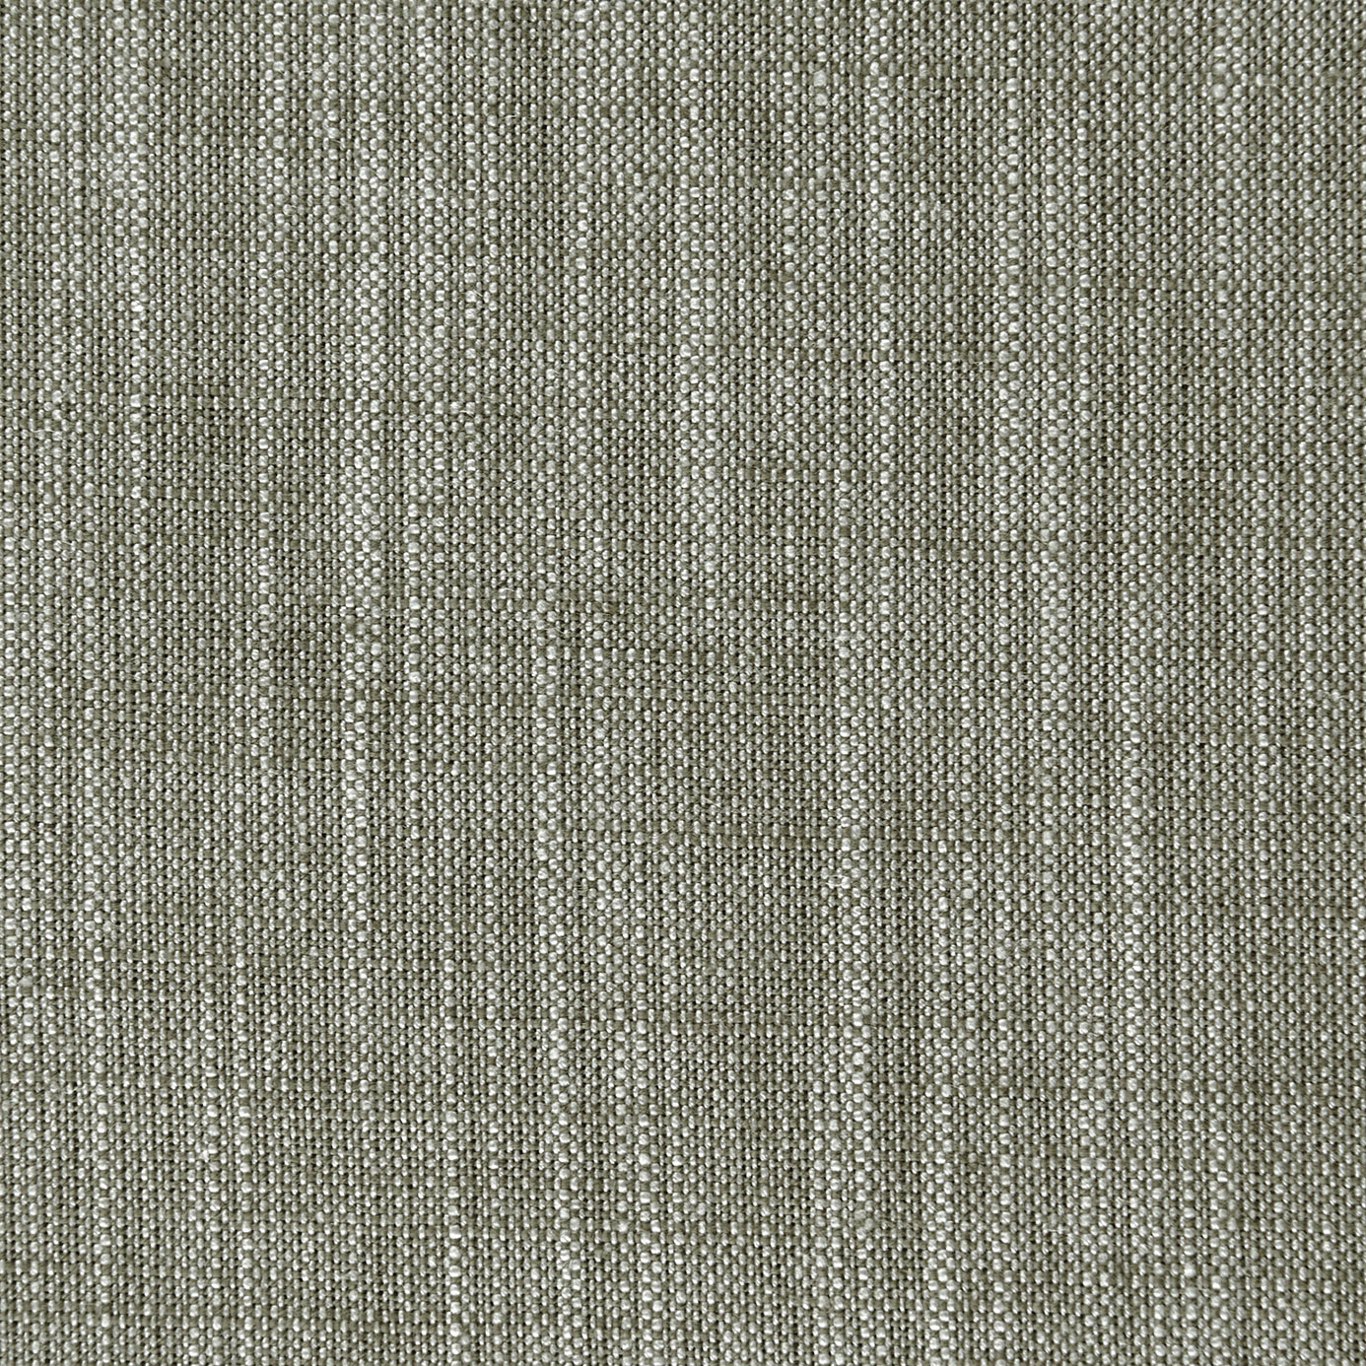 Biarritz Khaki Fabric by CNC